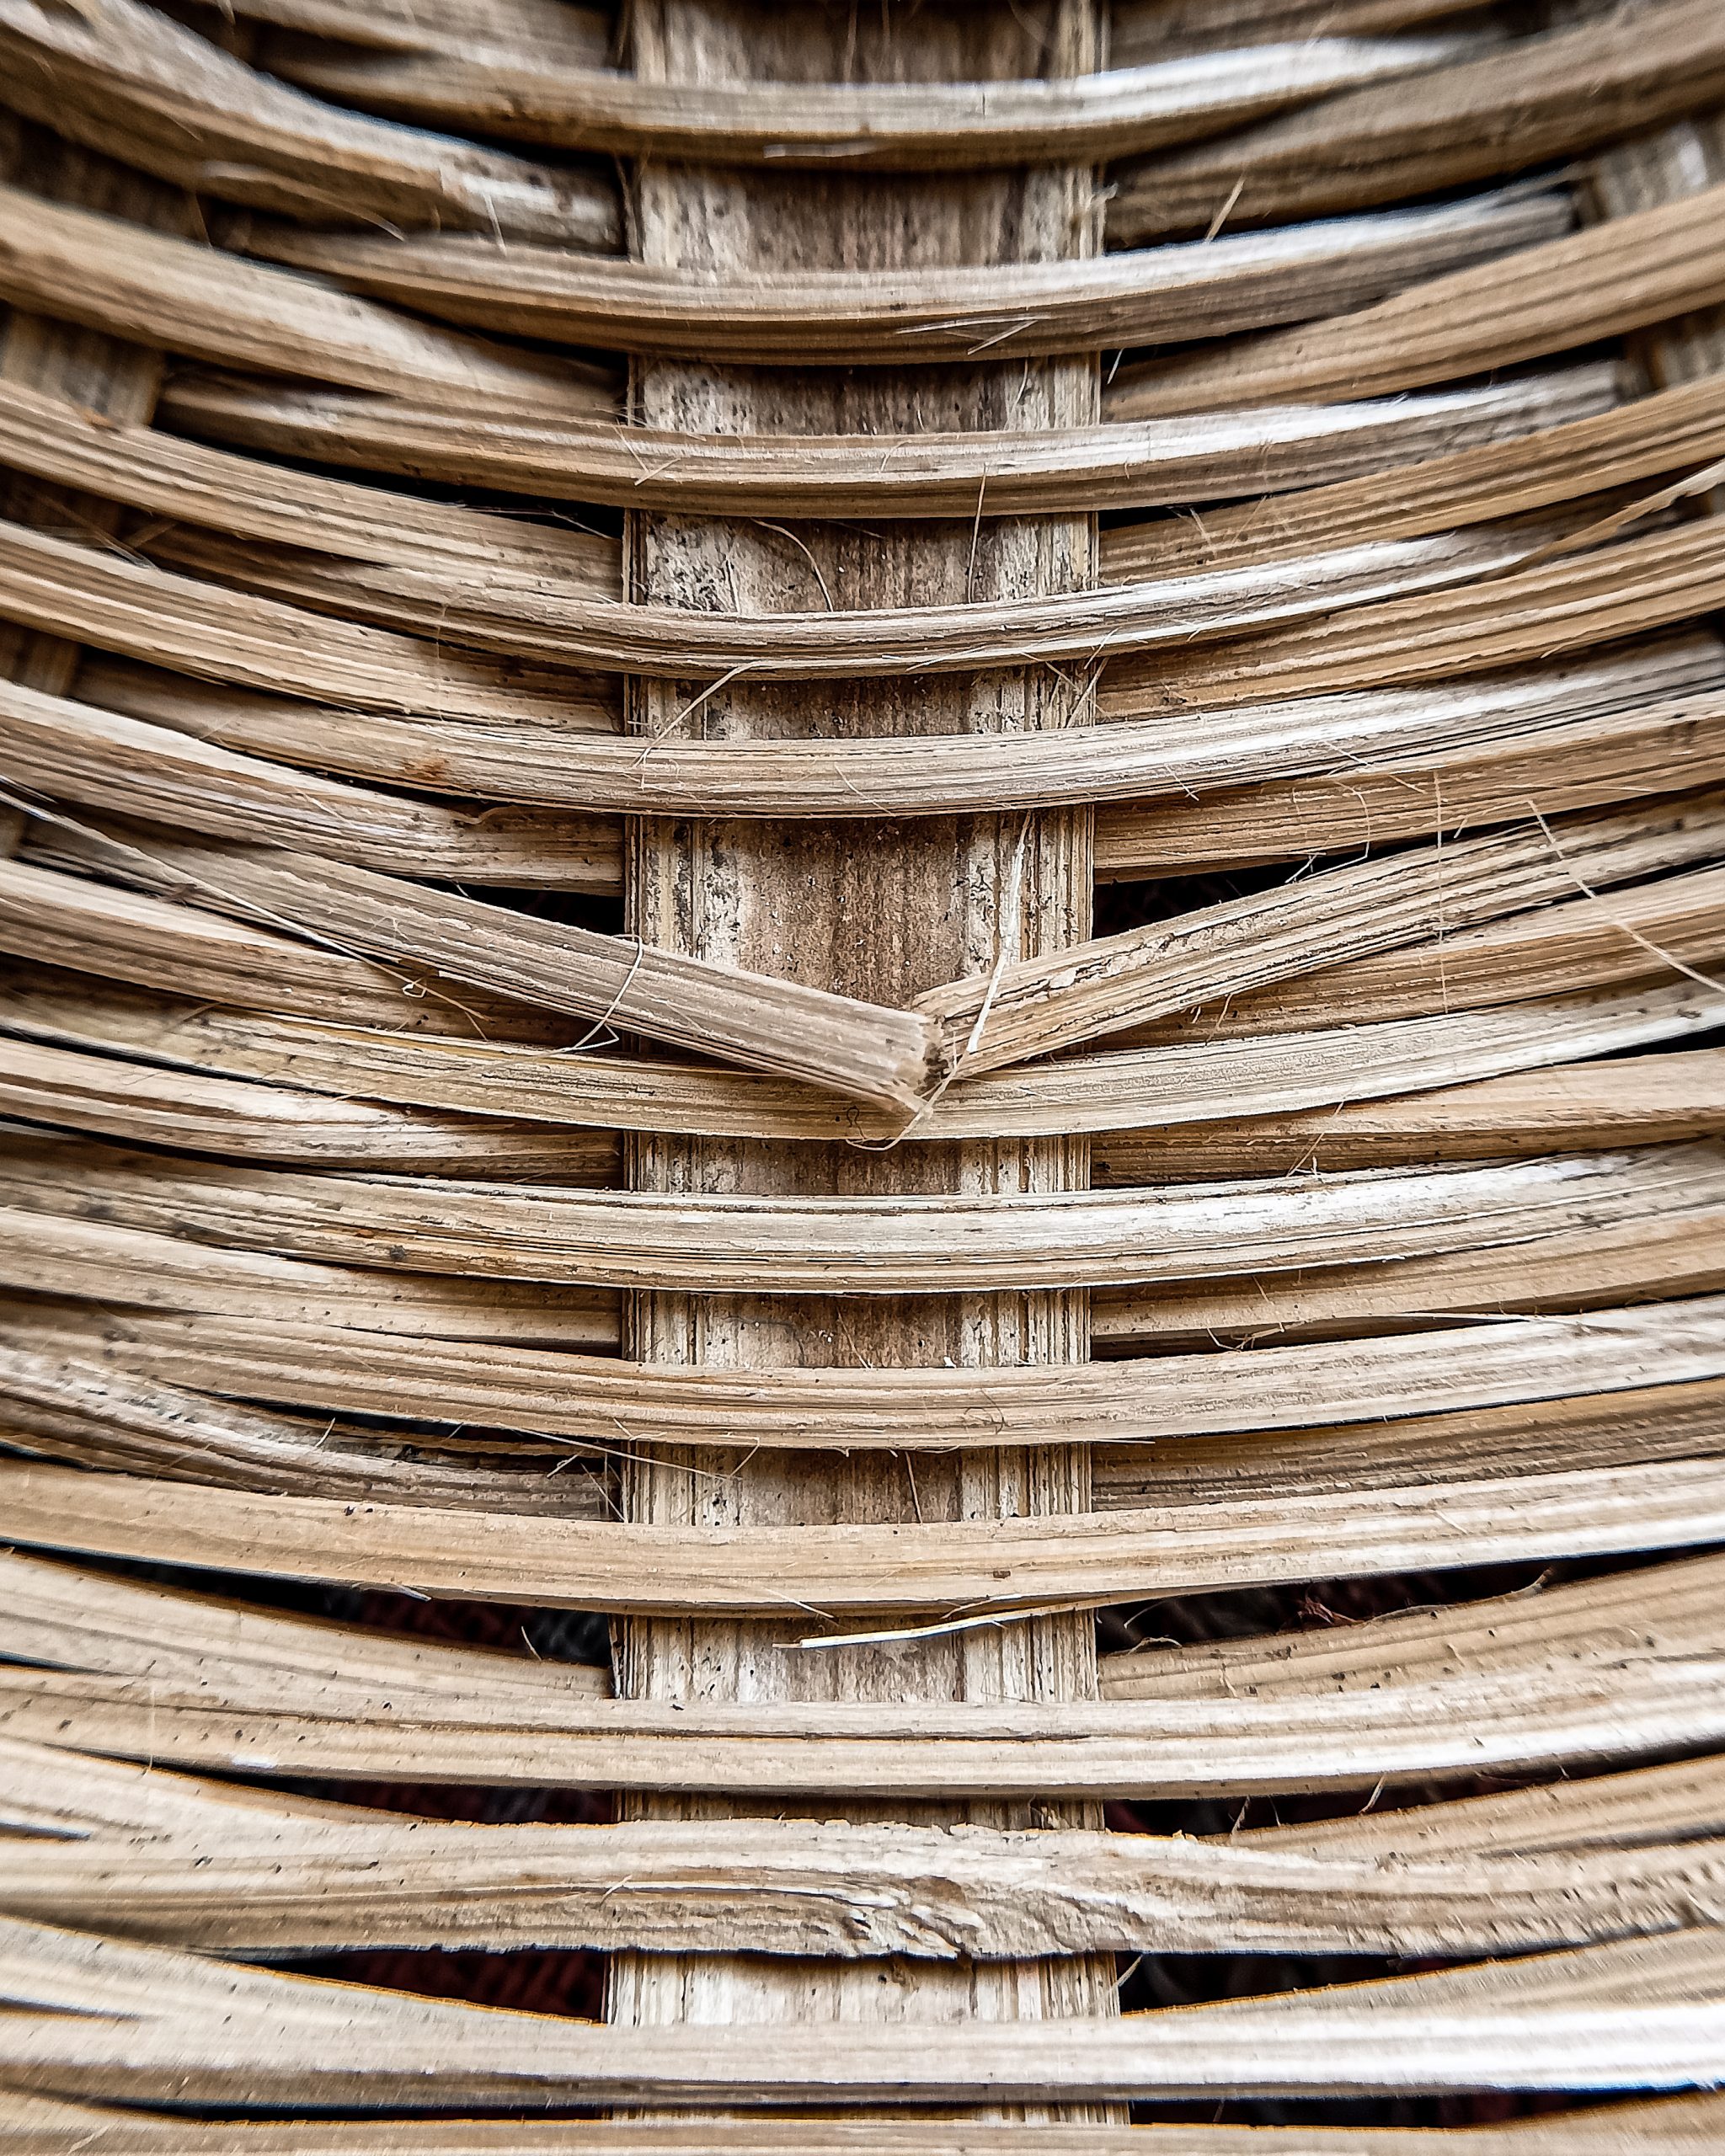 A wooden basket